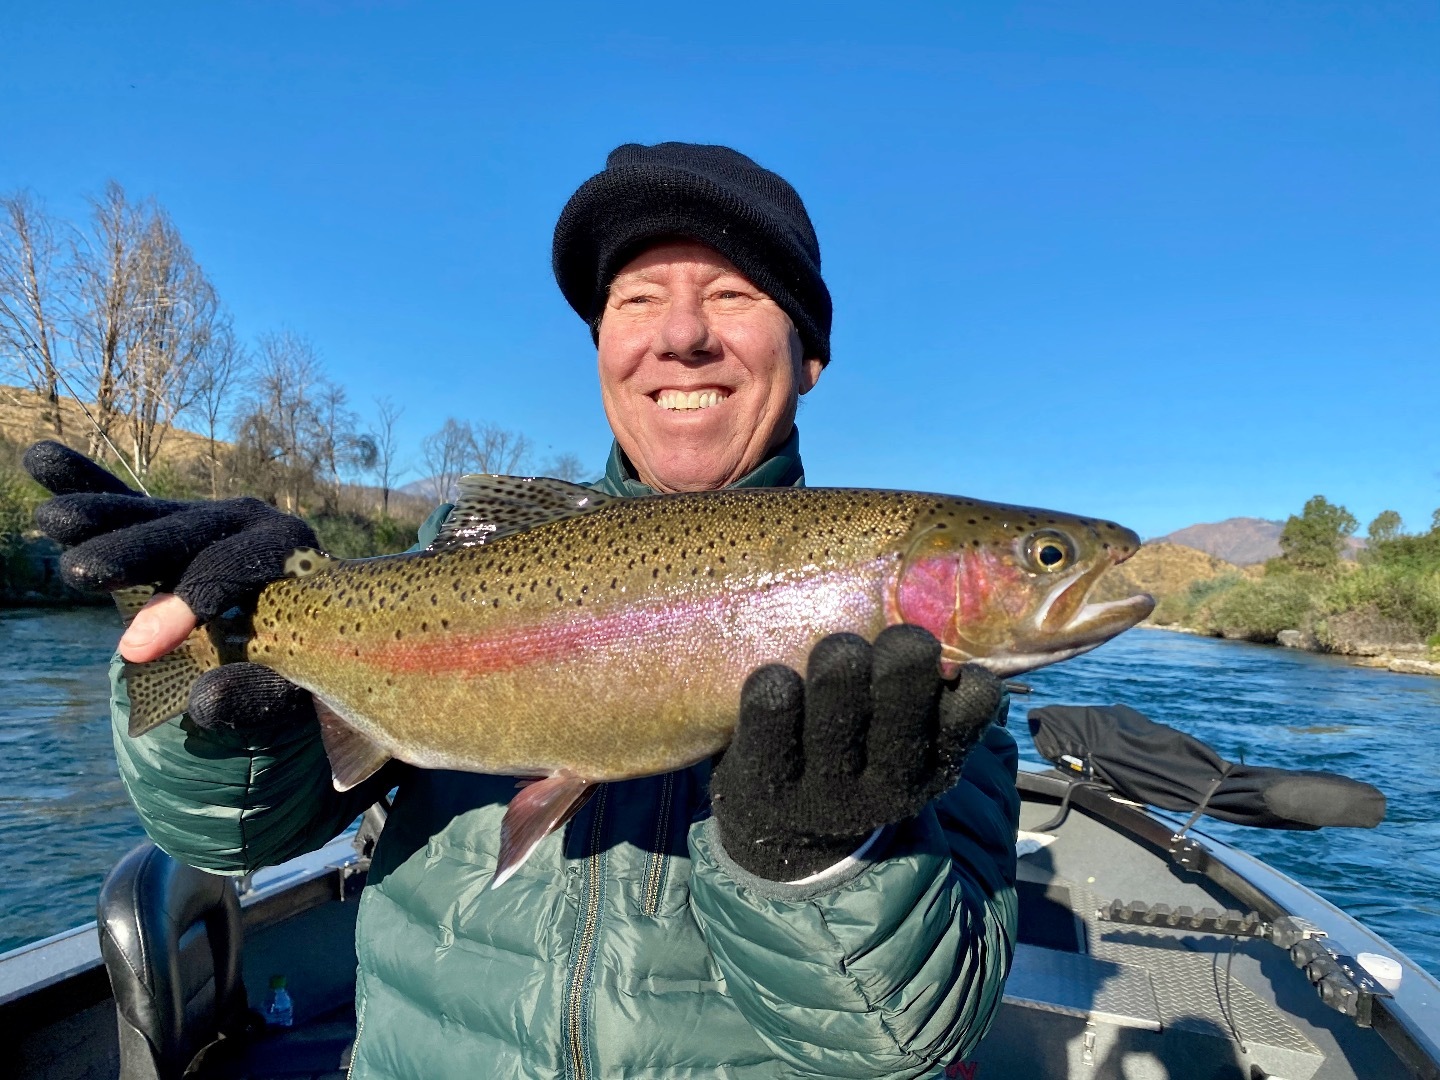 Epic wild rainbow trout fishing!